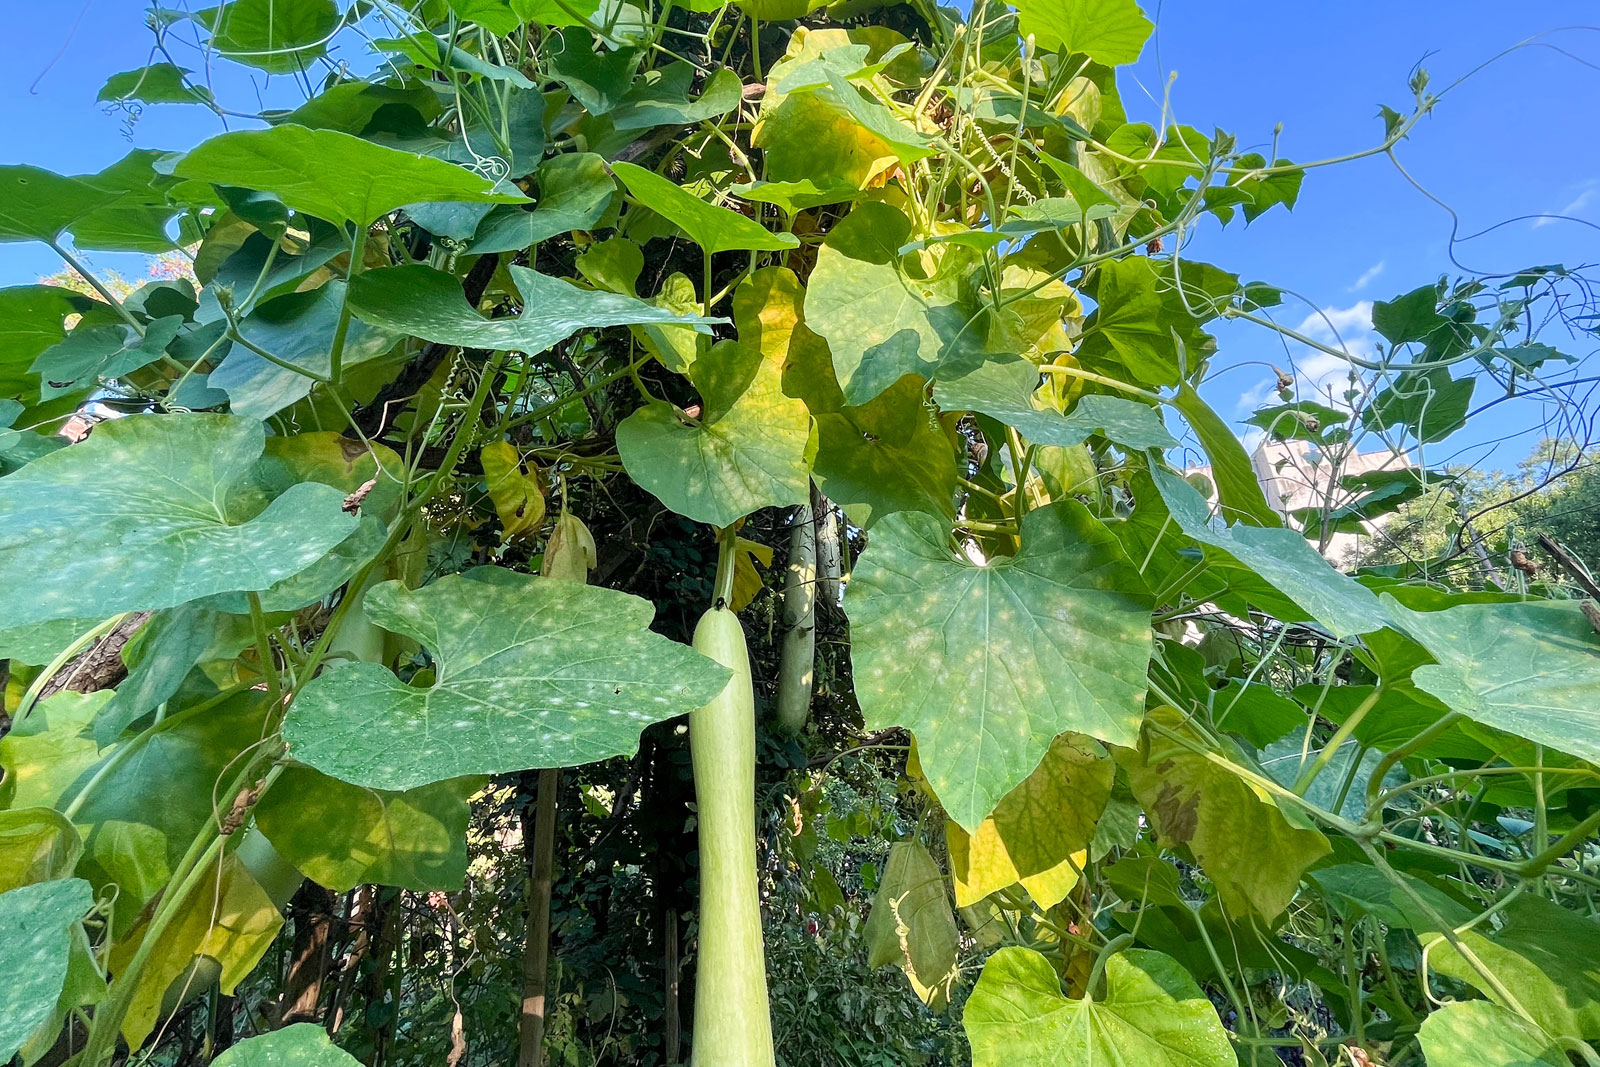 Lau (bottle gourd) growing on the vine